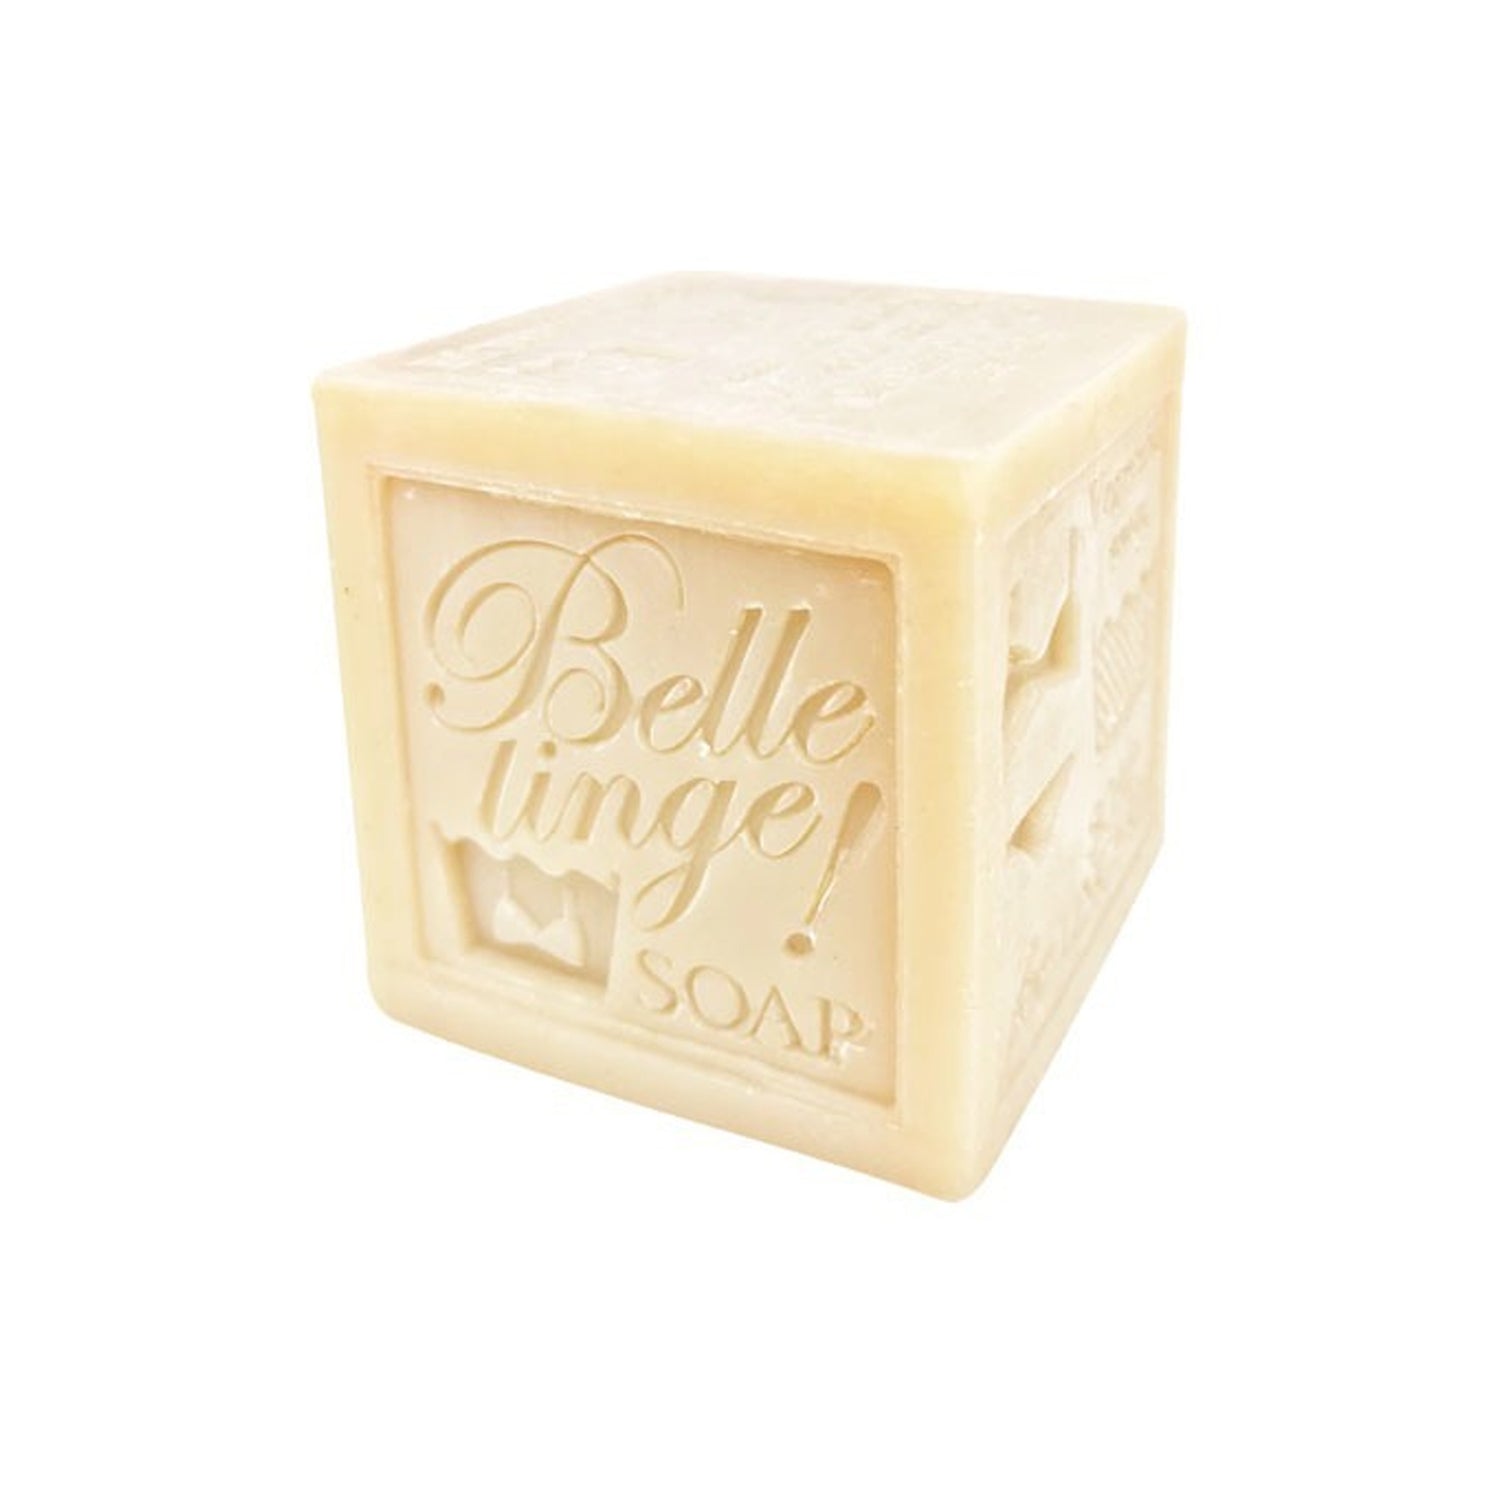 Pelican Soap Belle Linge Soap For Lingerie Rose Laundry bar soap 160g